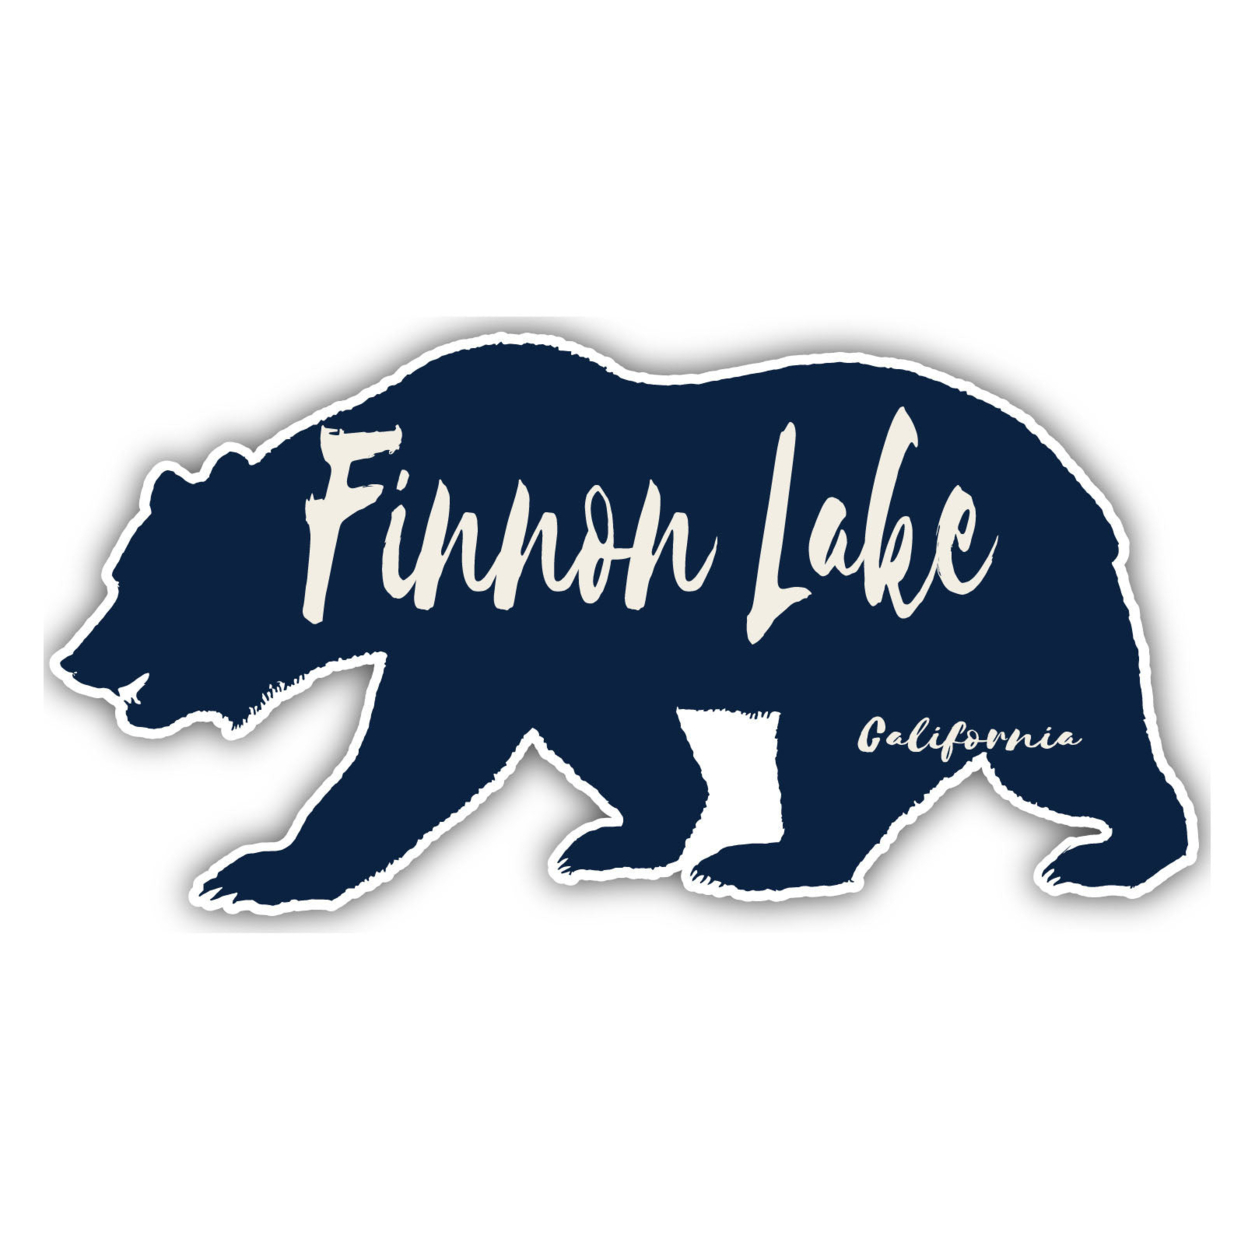 Finnon Lake California Souvenir Decorative Stickers (Choose Theme And Size) - 4-Pack, 4-Inch, Tent